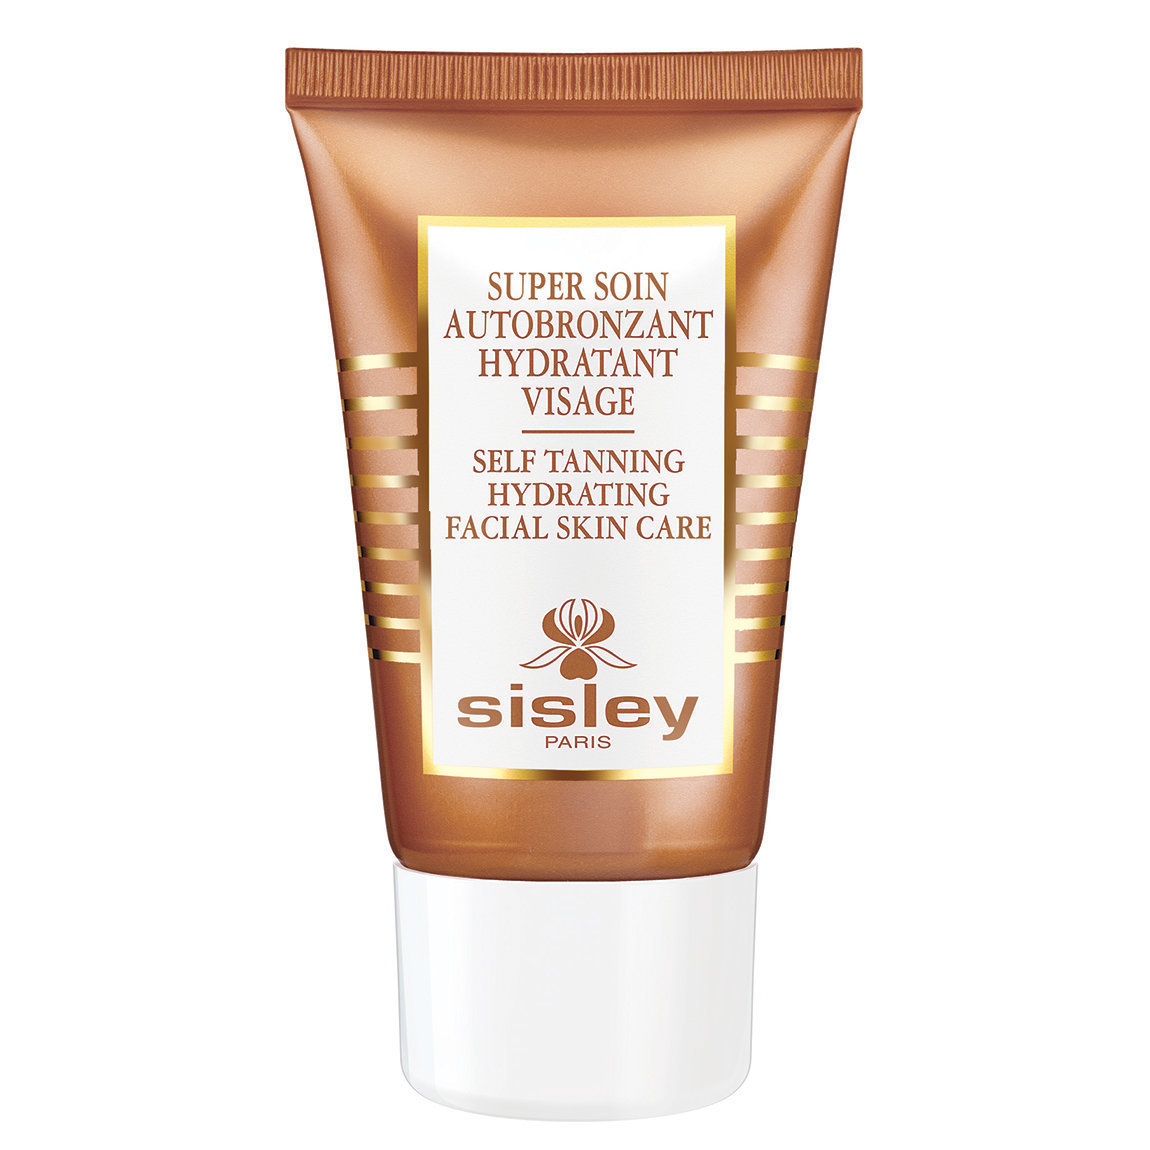 Sisley-Paris Self Tanning Facial Skin Care alternative view 1 - product swatch.